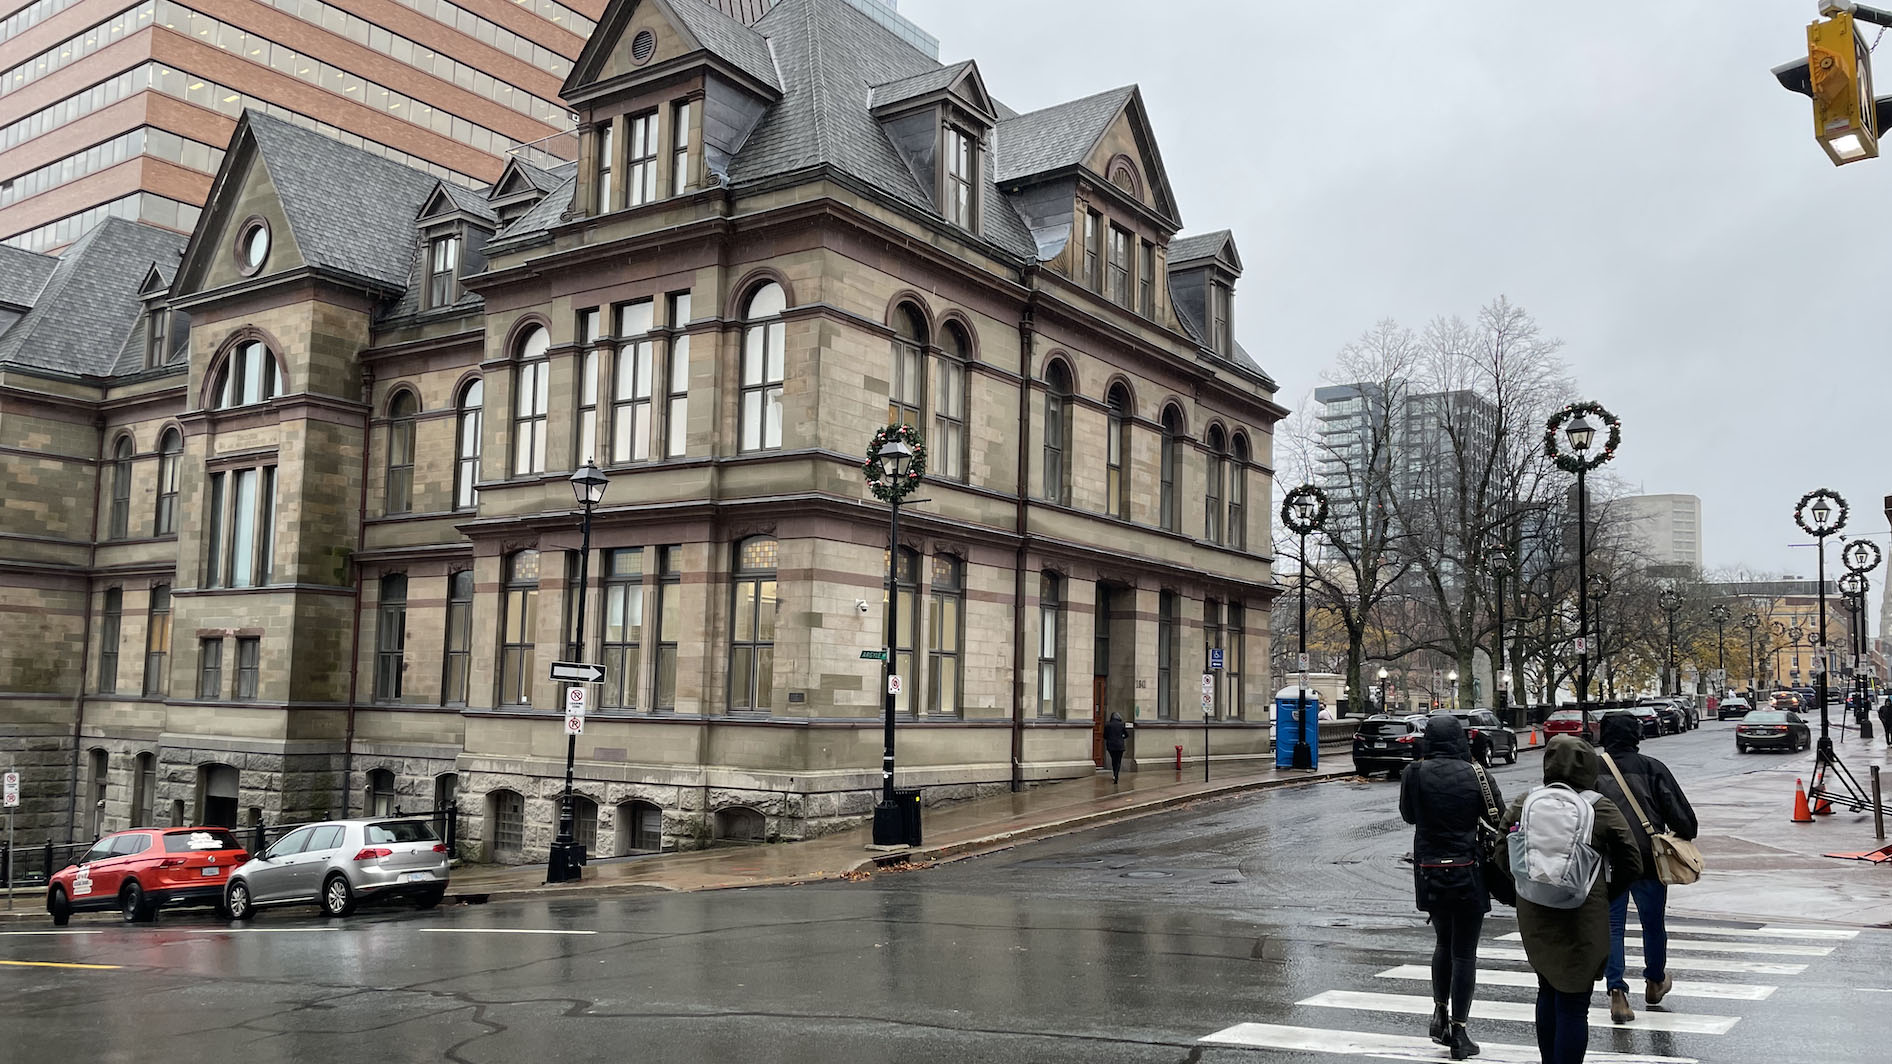 Pedestrians cross a rainy sidewalk at Halifax City Hall on Tuesday.